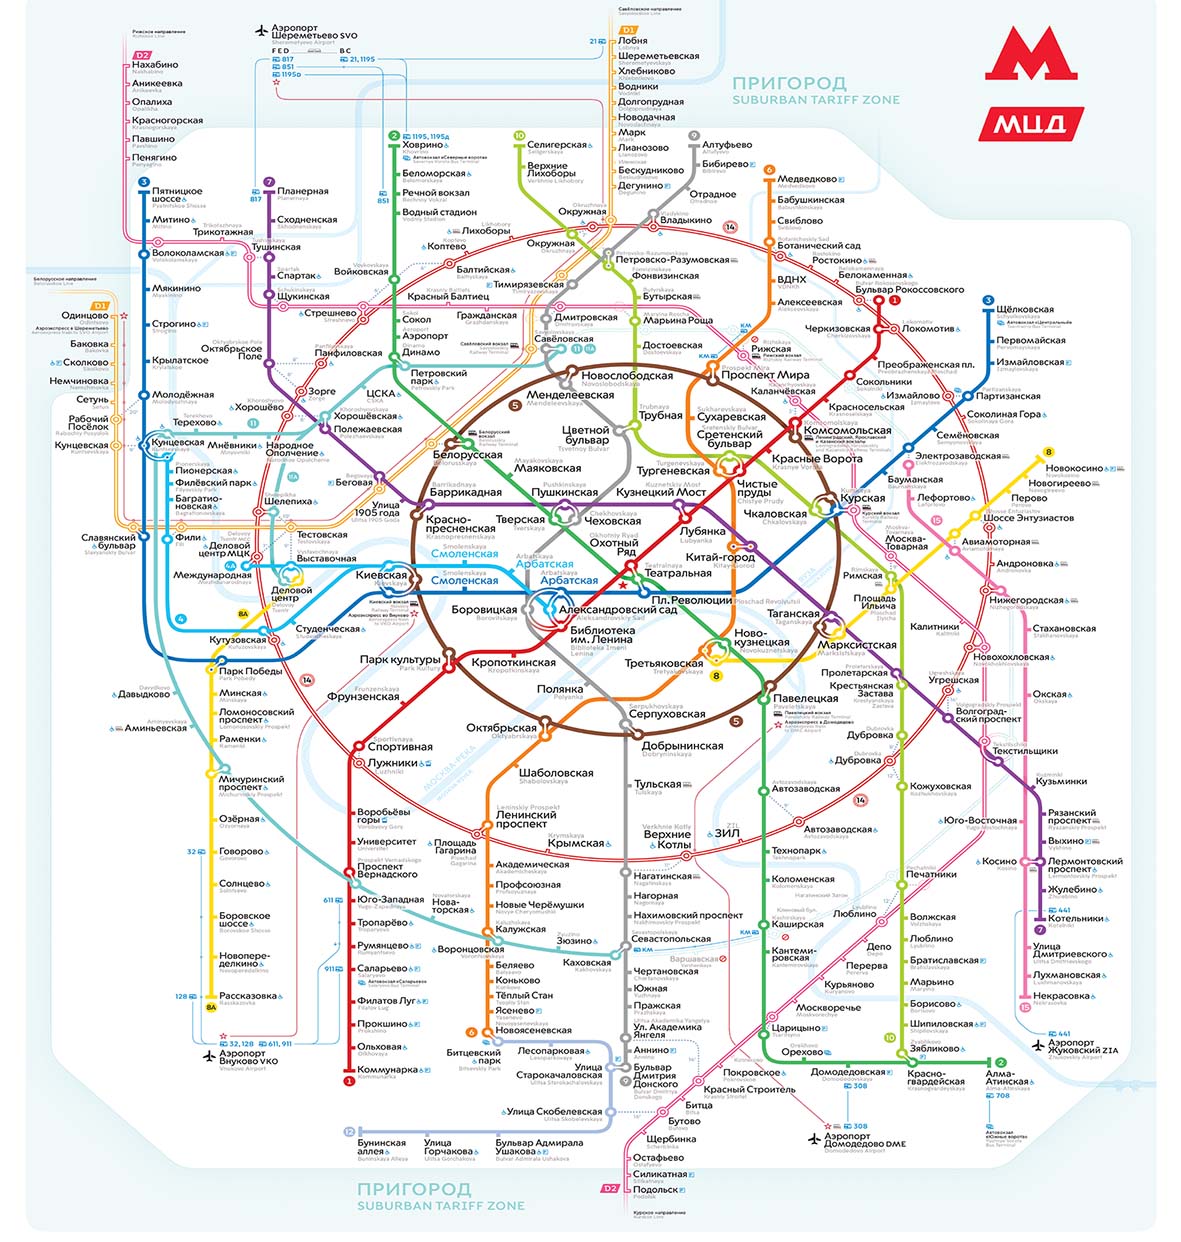 Moskow metro-Russian, Turkish, Azerbaijani translations